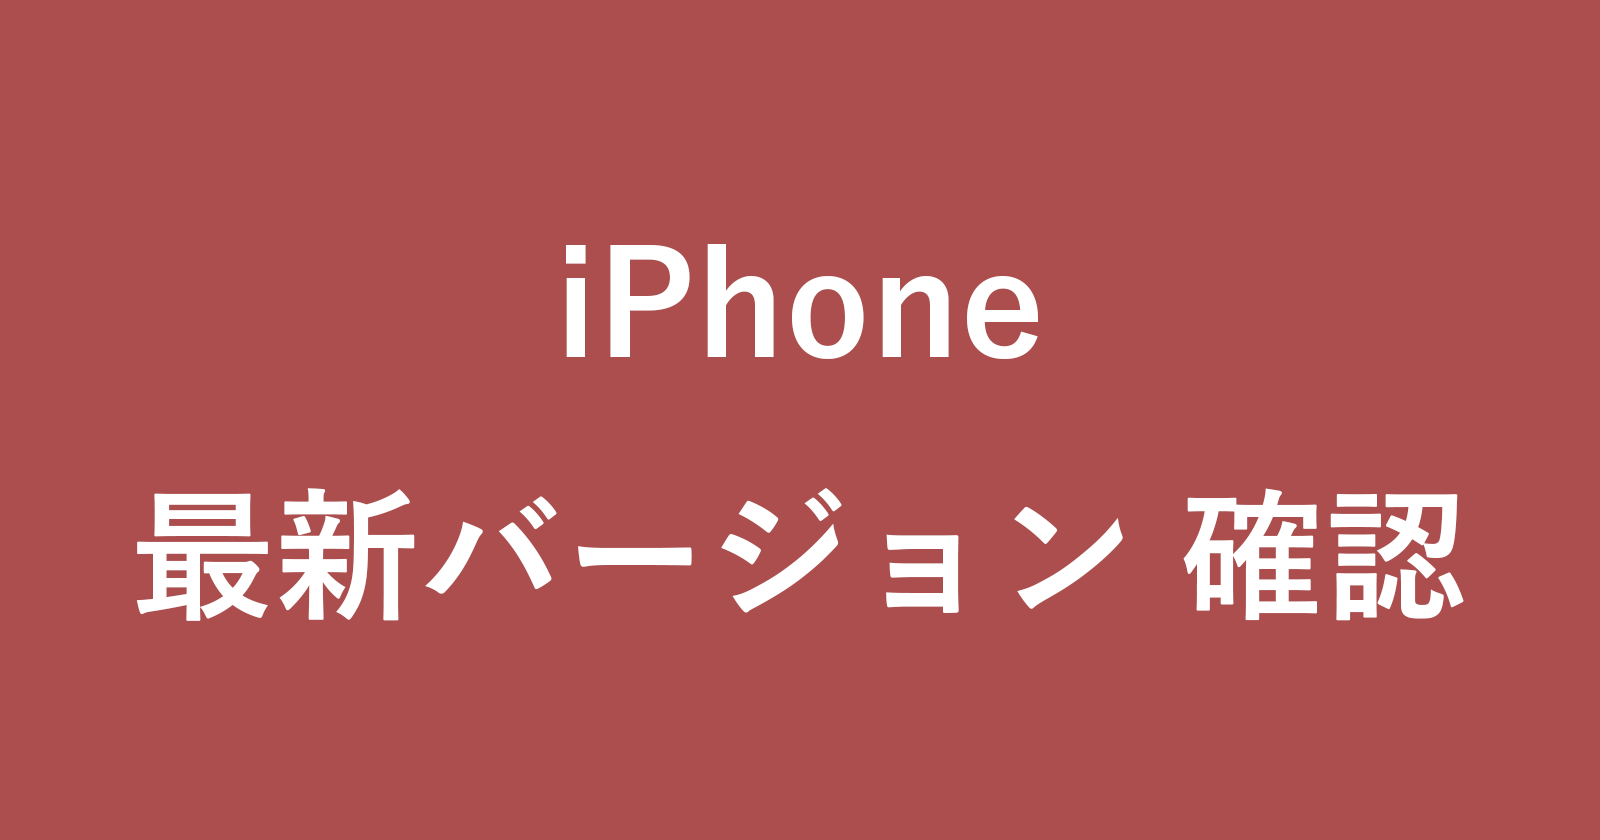 iphone latest version